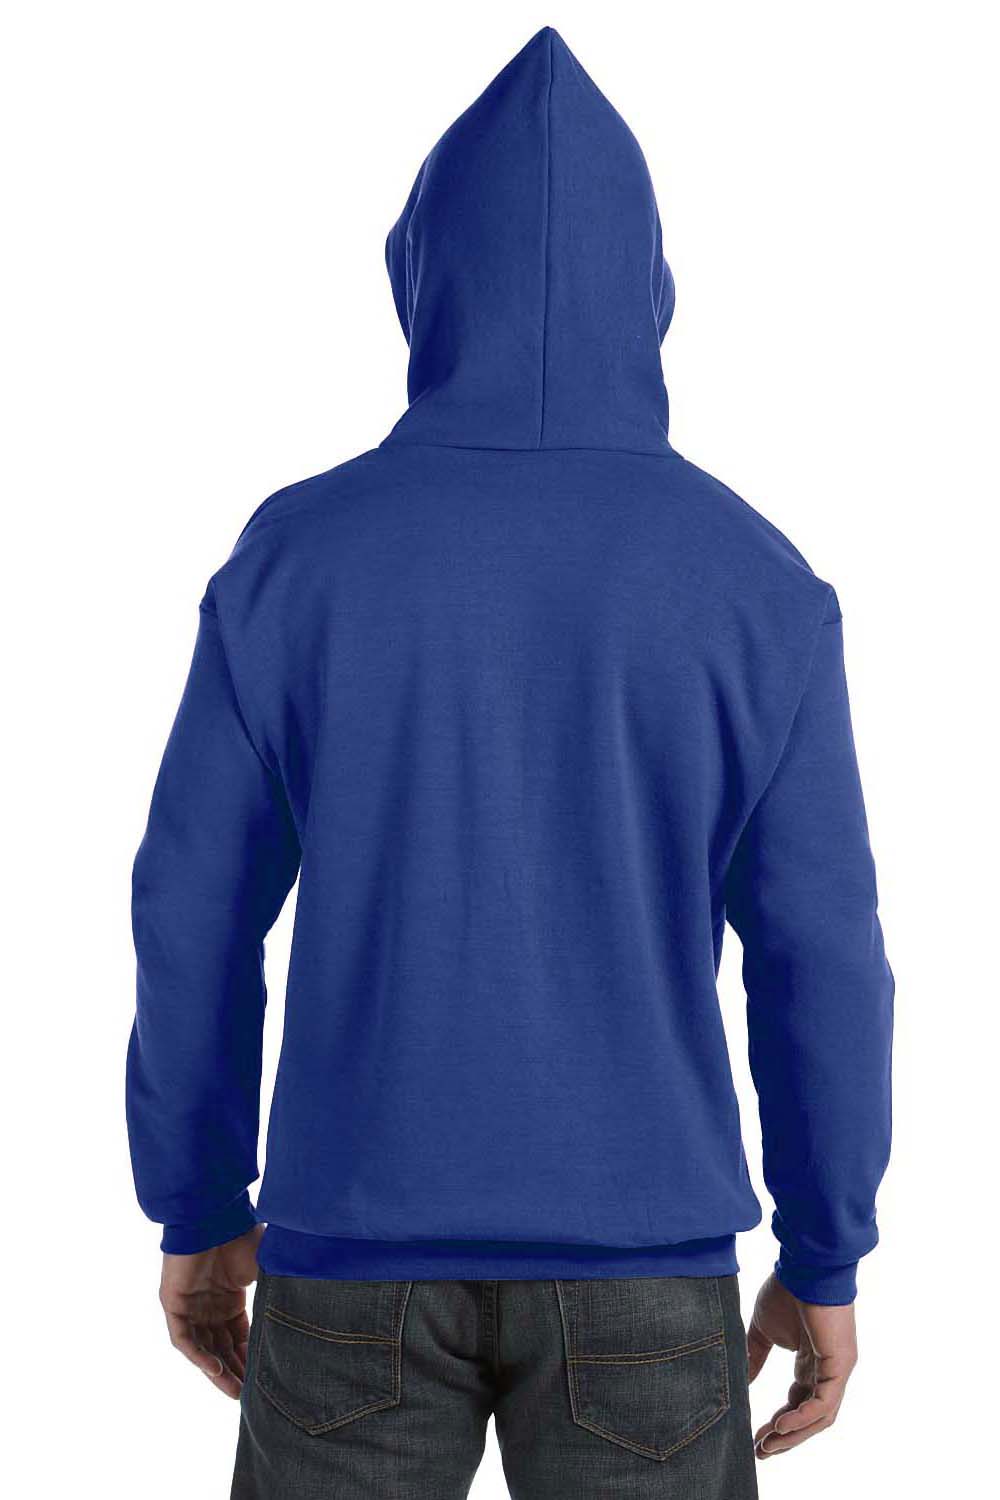 Hanes P170 Mens EcoSmart Print Pro XP Hooded Sweatshirt Hoodie Royal Blue Back